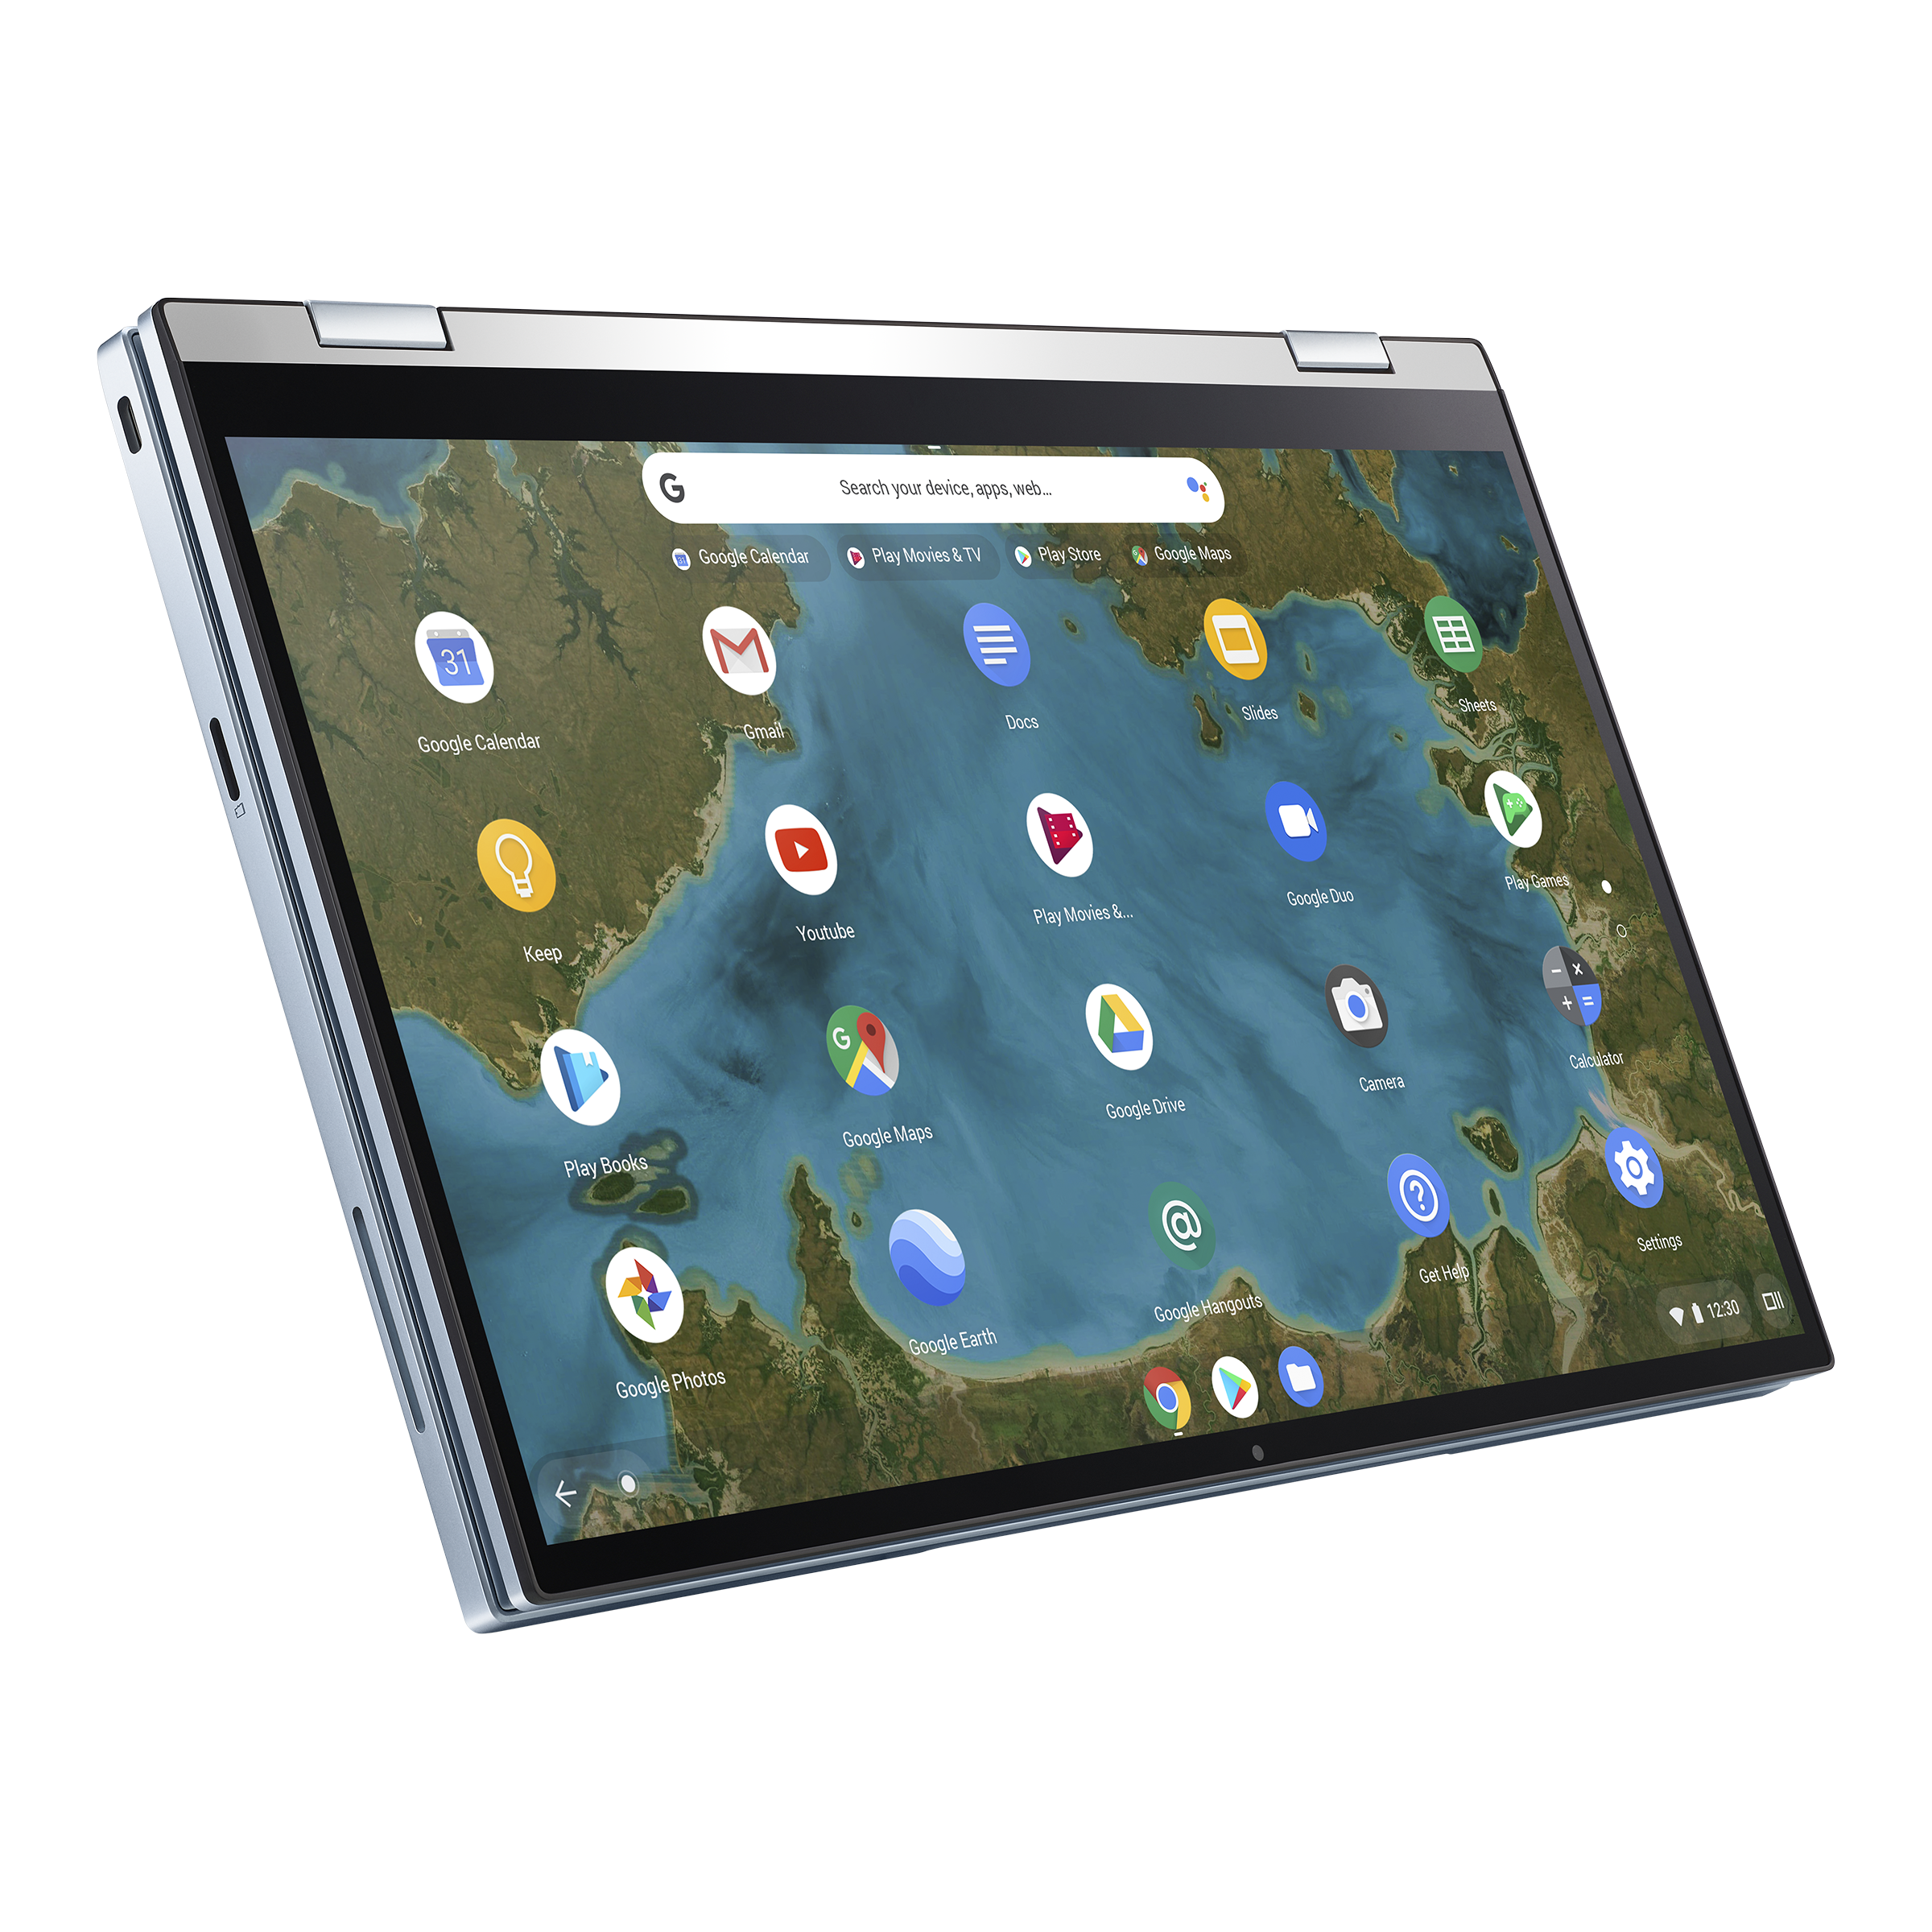 ASUS Chromebook Flip C433｜Laptops For Home｜ASUS Baltics